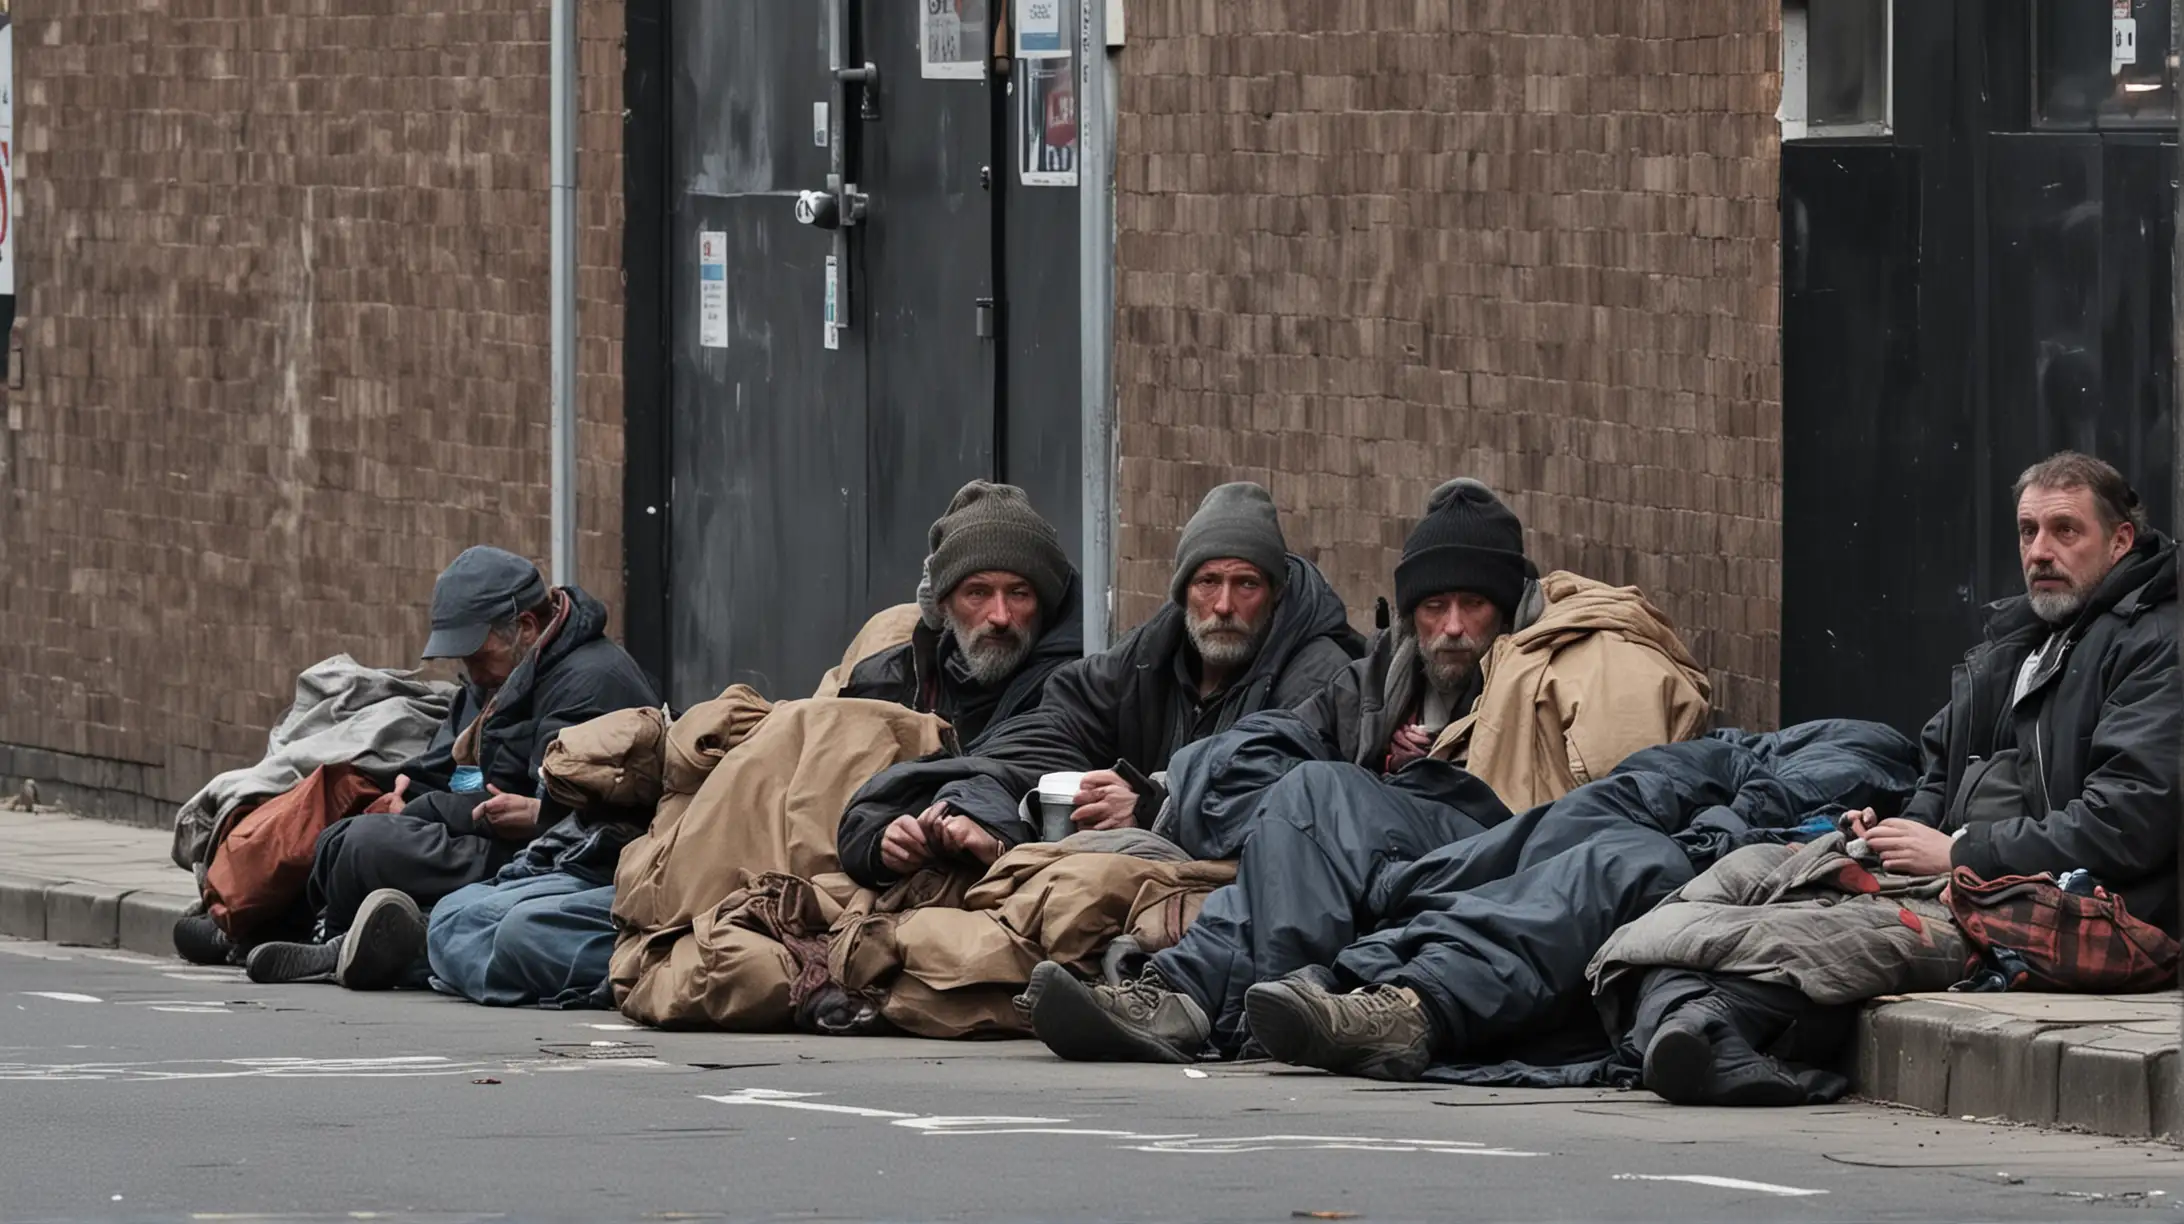 Community of Homeless Individuals Seeking Shelter on UK Street